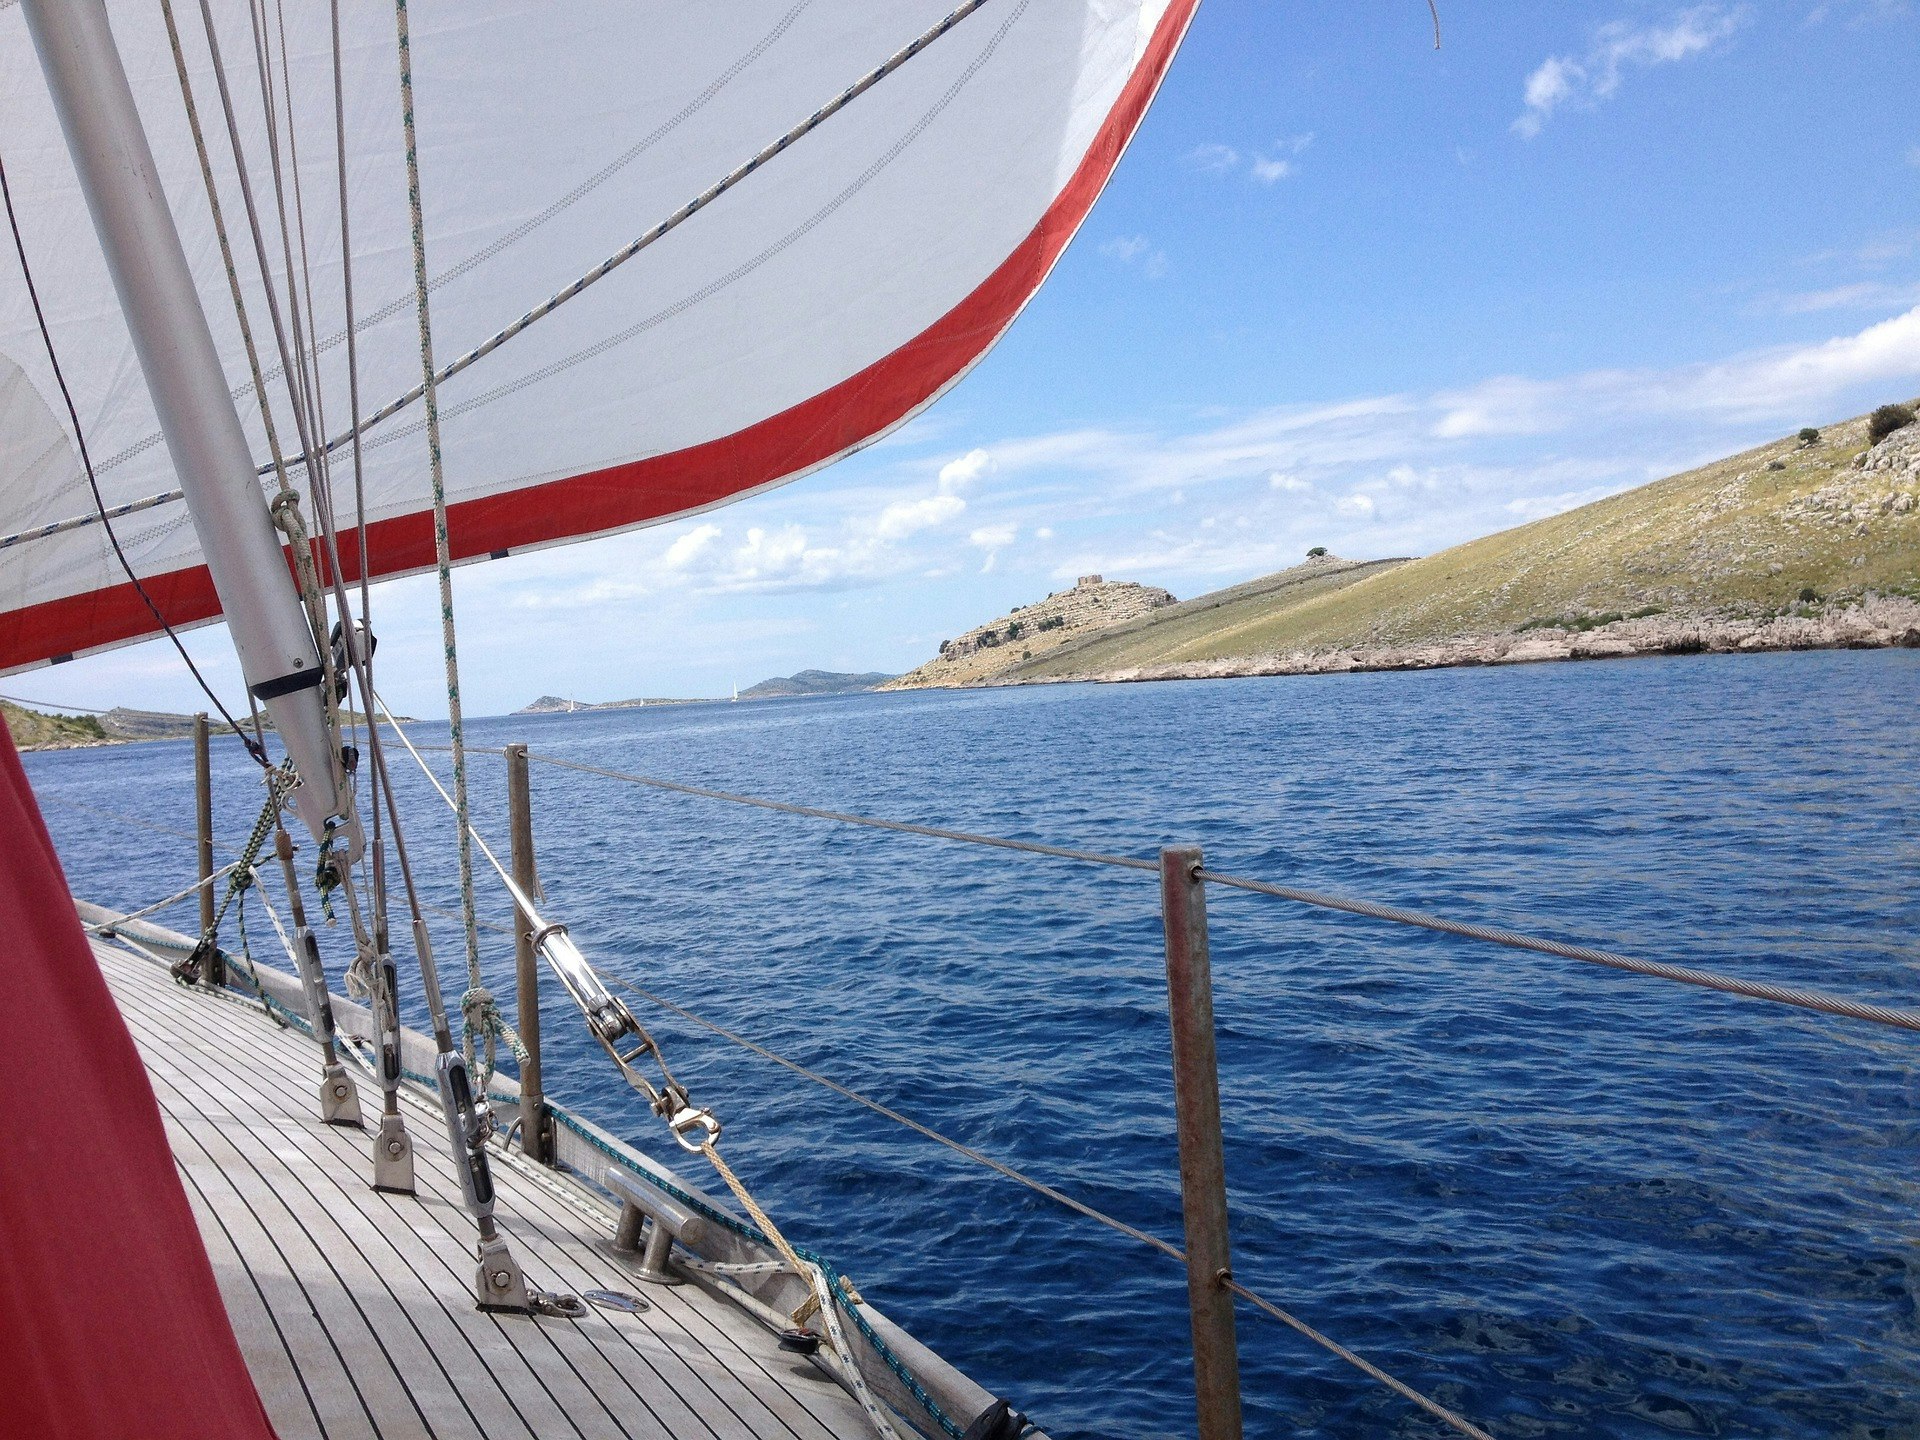 Sailing on a tailwind